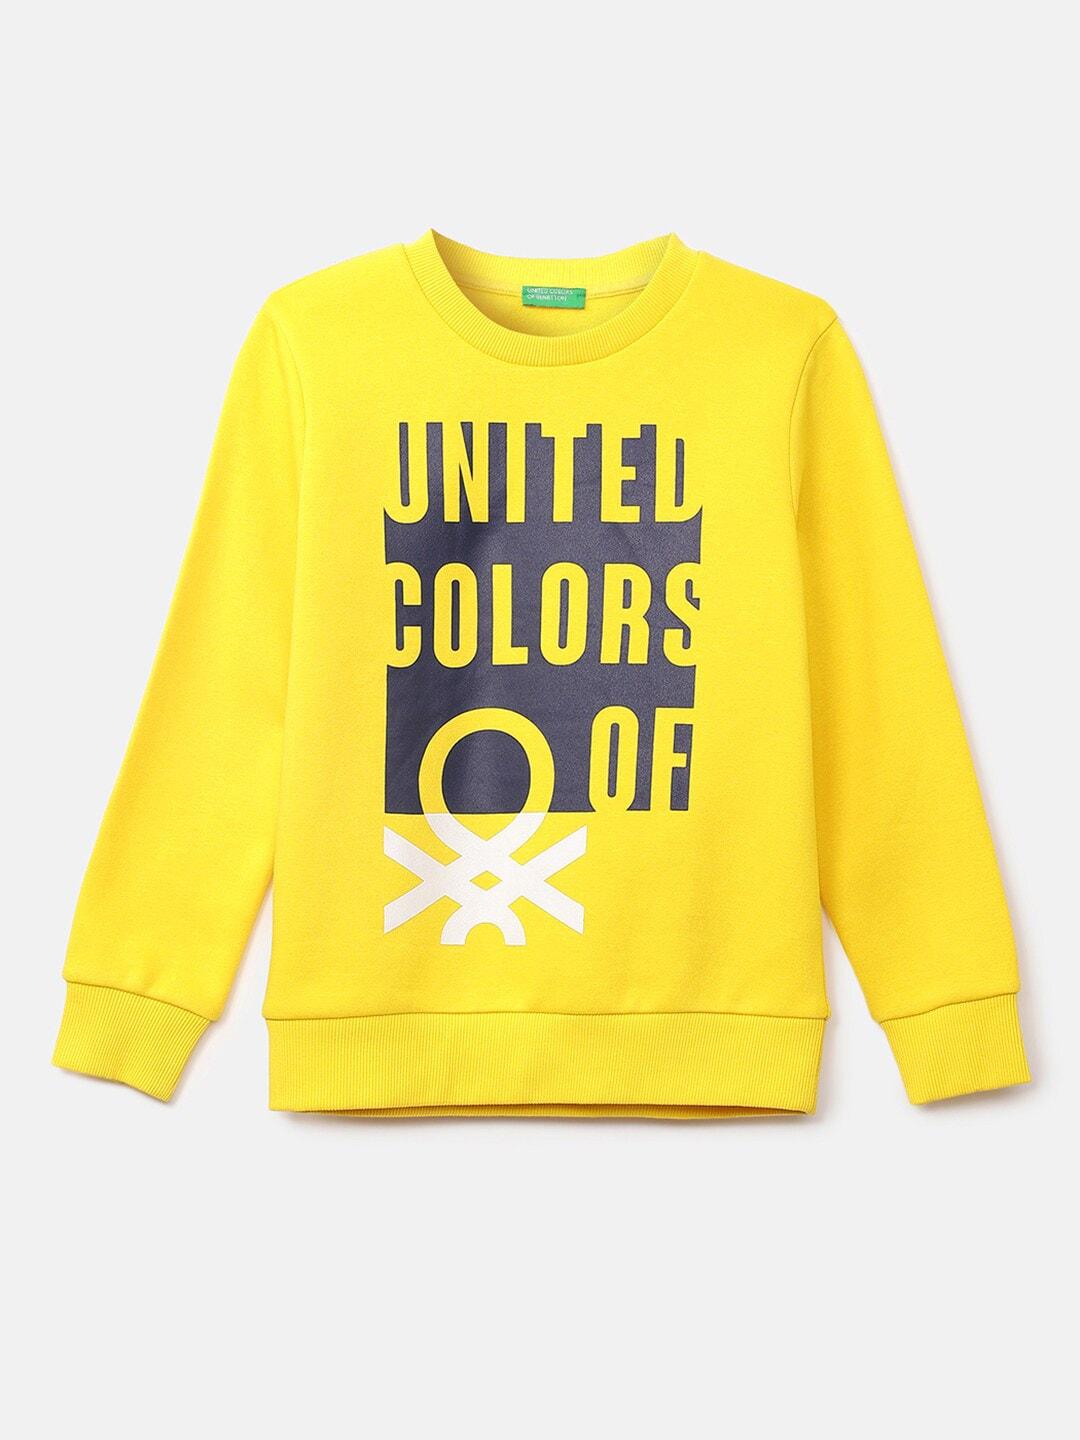 united-colors-of-benetton-boys-yellow-printed-cotton-sweatshirt